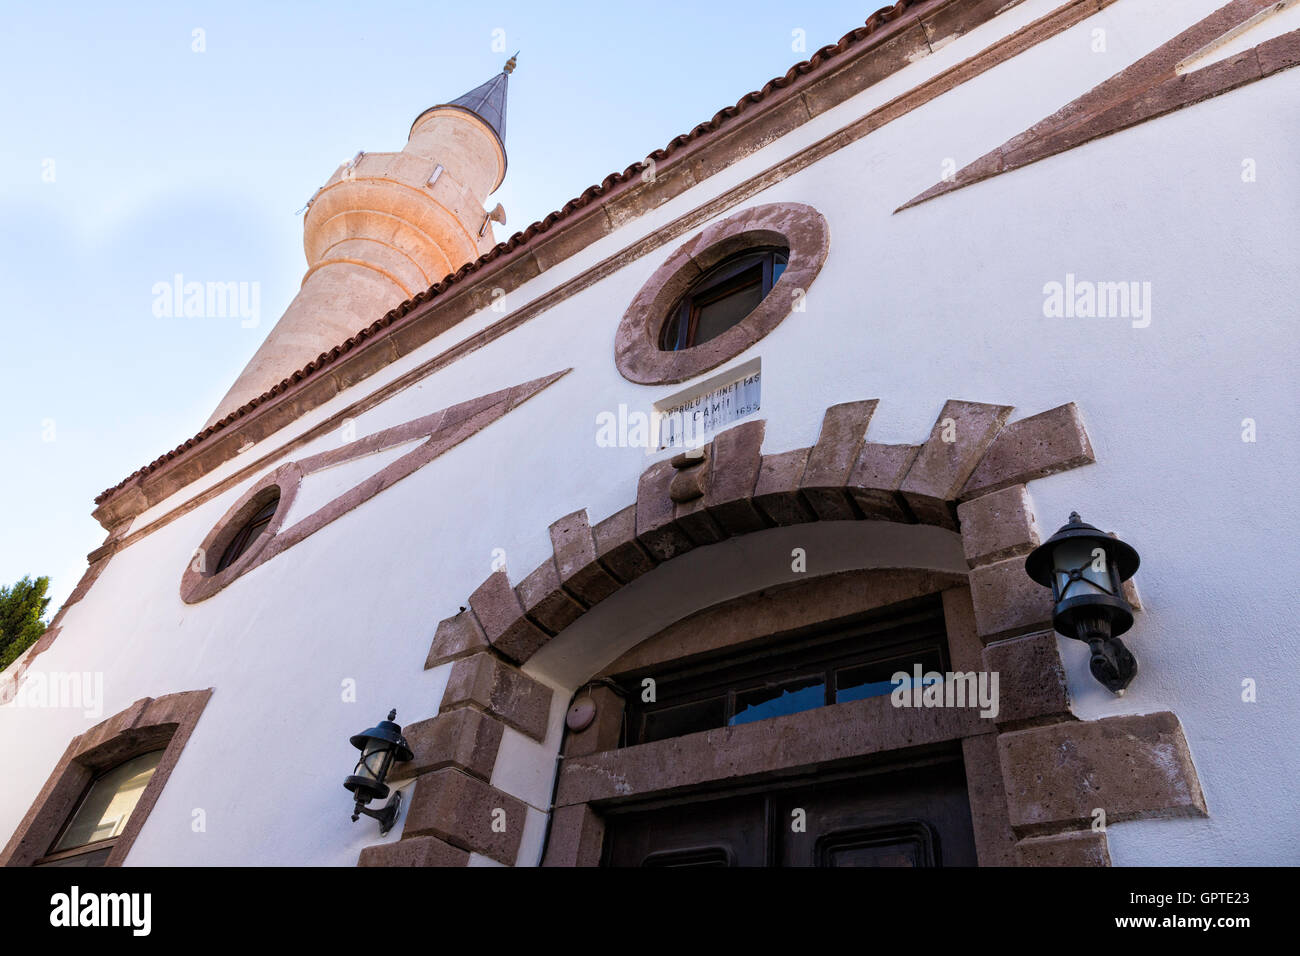 Historical Ottoman Koprulu Mehmet Pasa Cami, mosque, in Bozcaada, Canakkale, Turkey Stock Photo